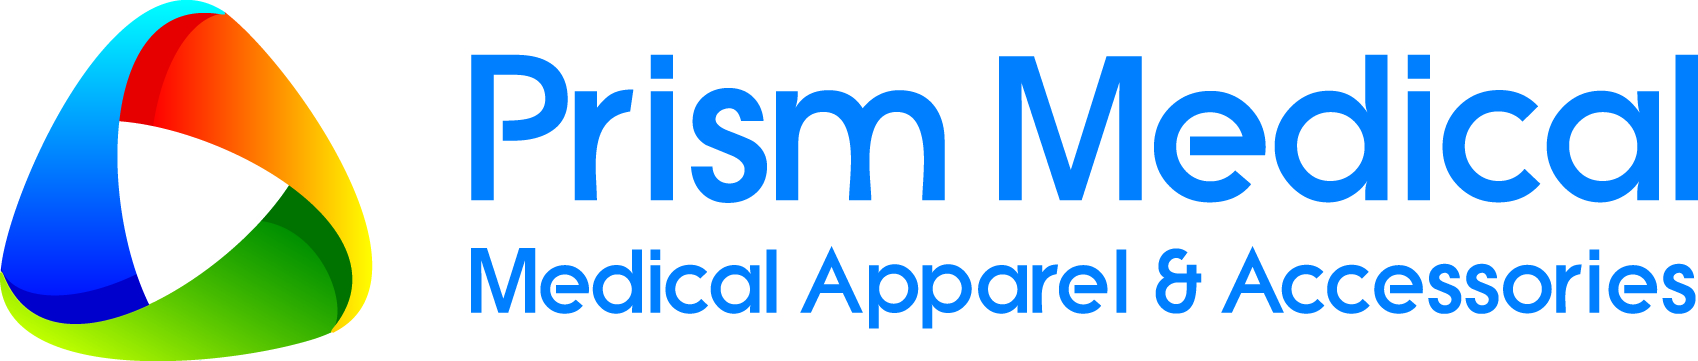 Prism Medical Apparel